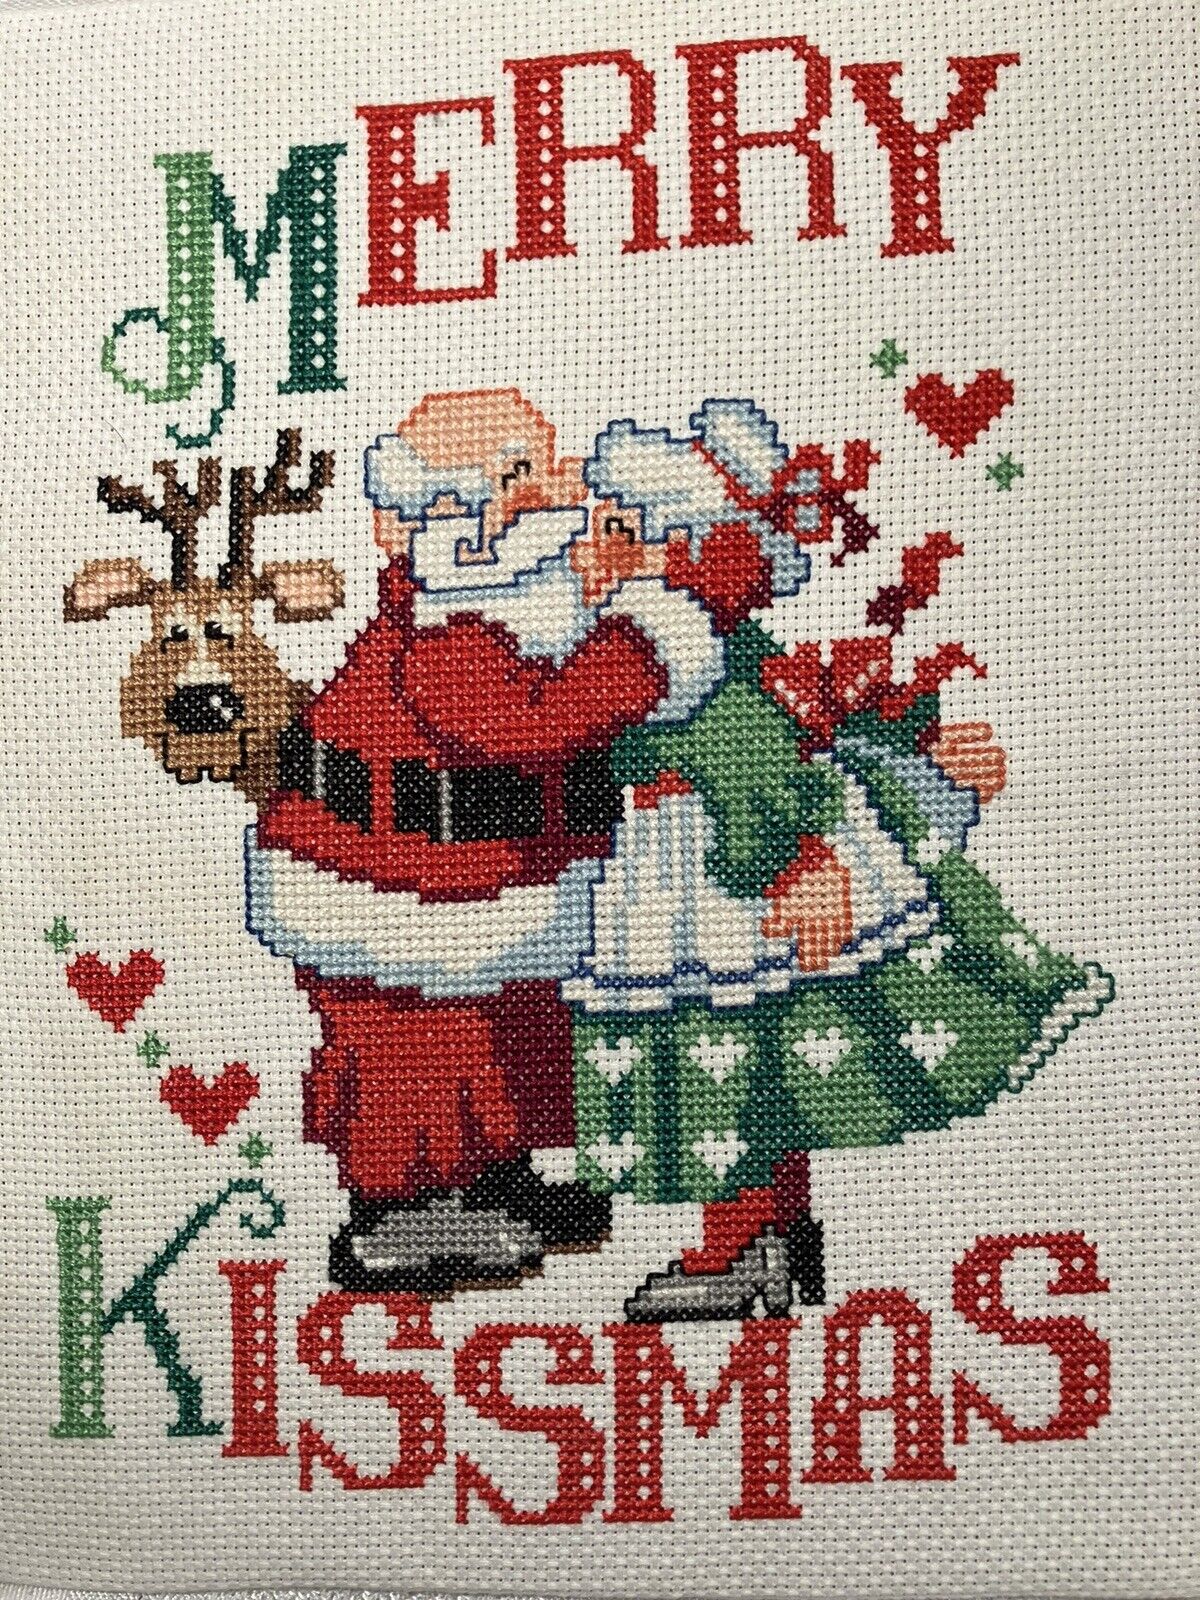 handmade finished cross stitch merry kissmiss Christmas picture 